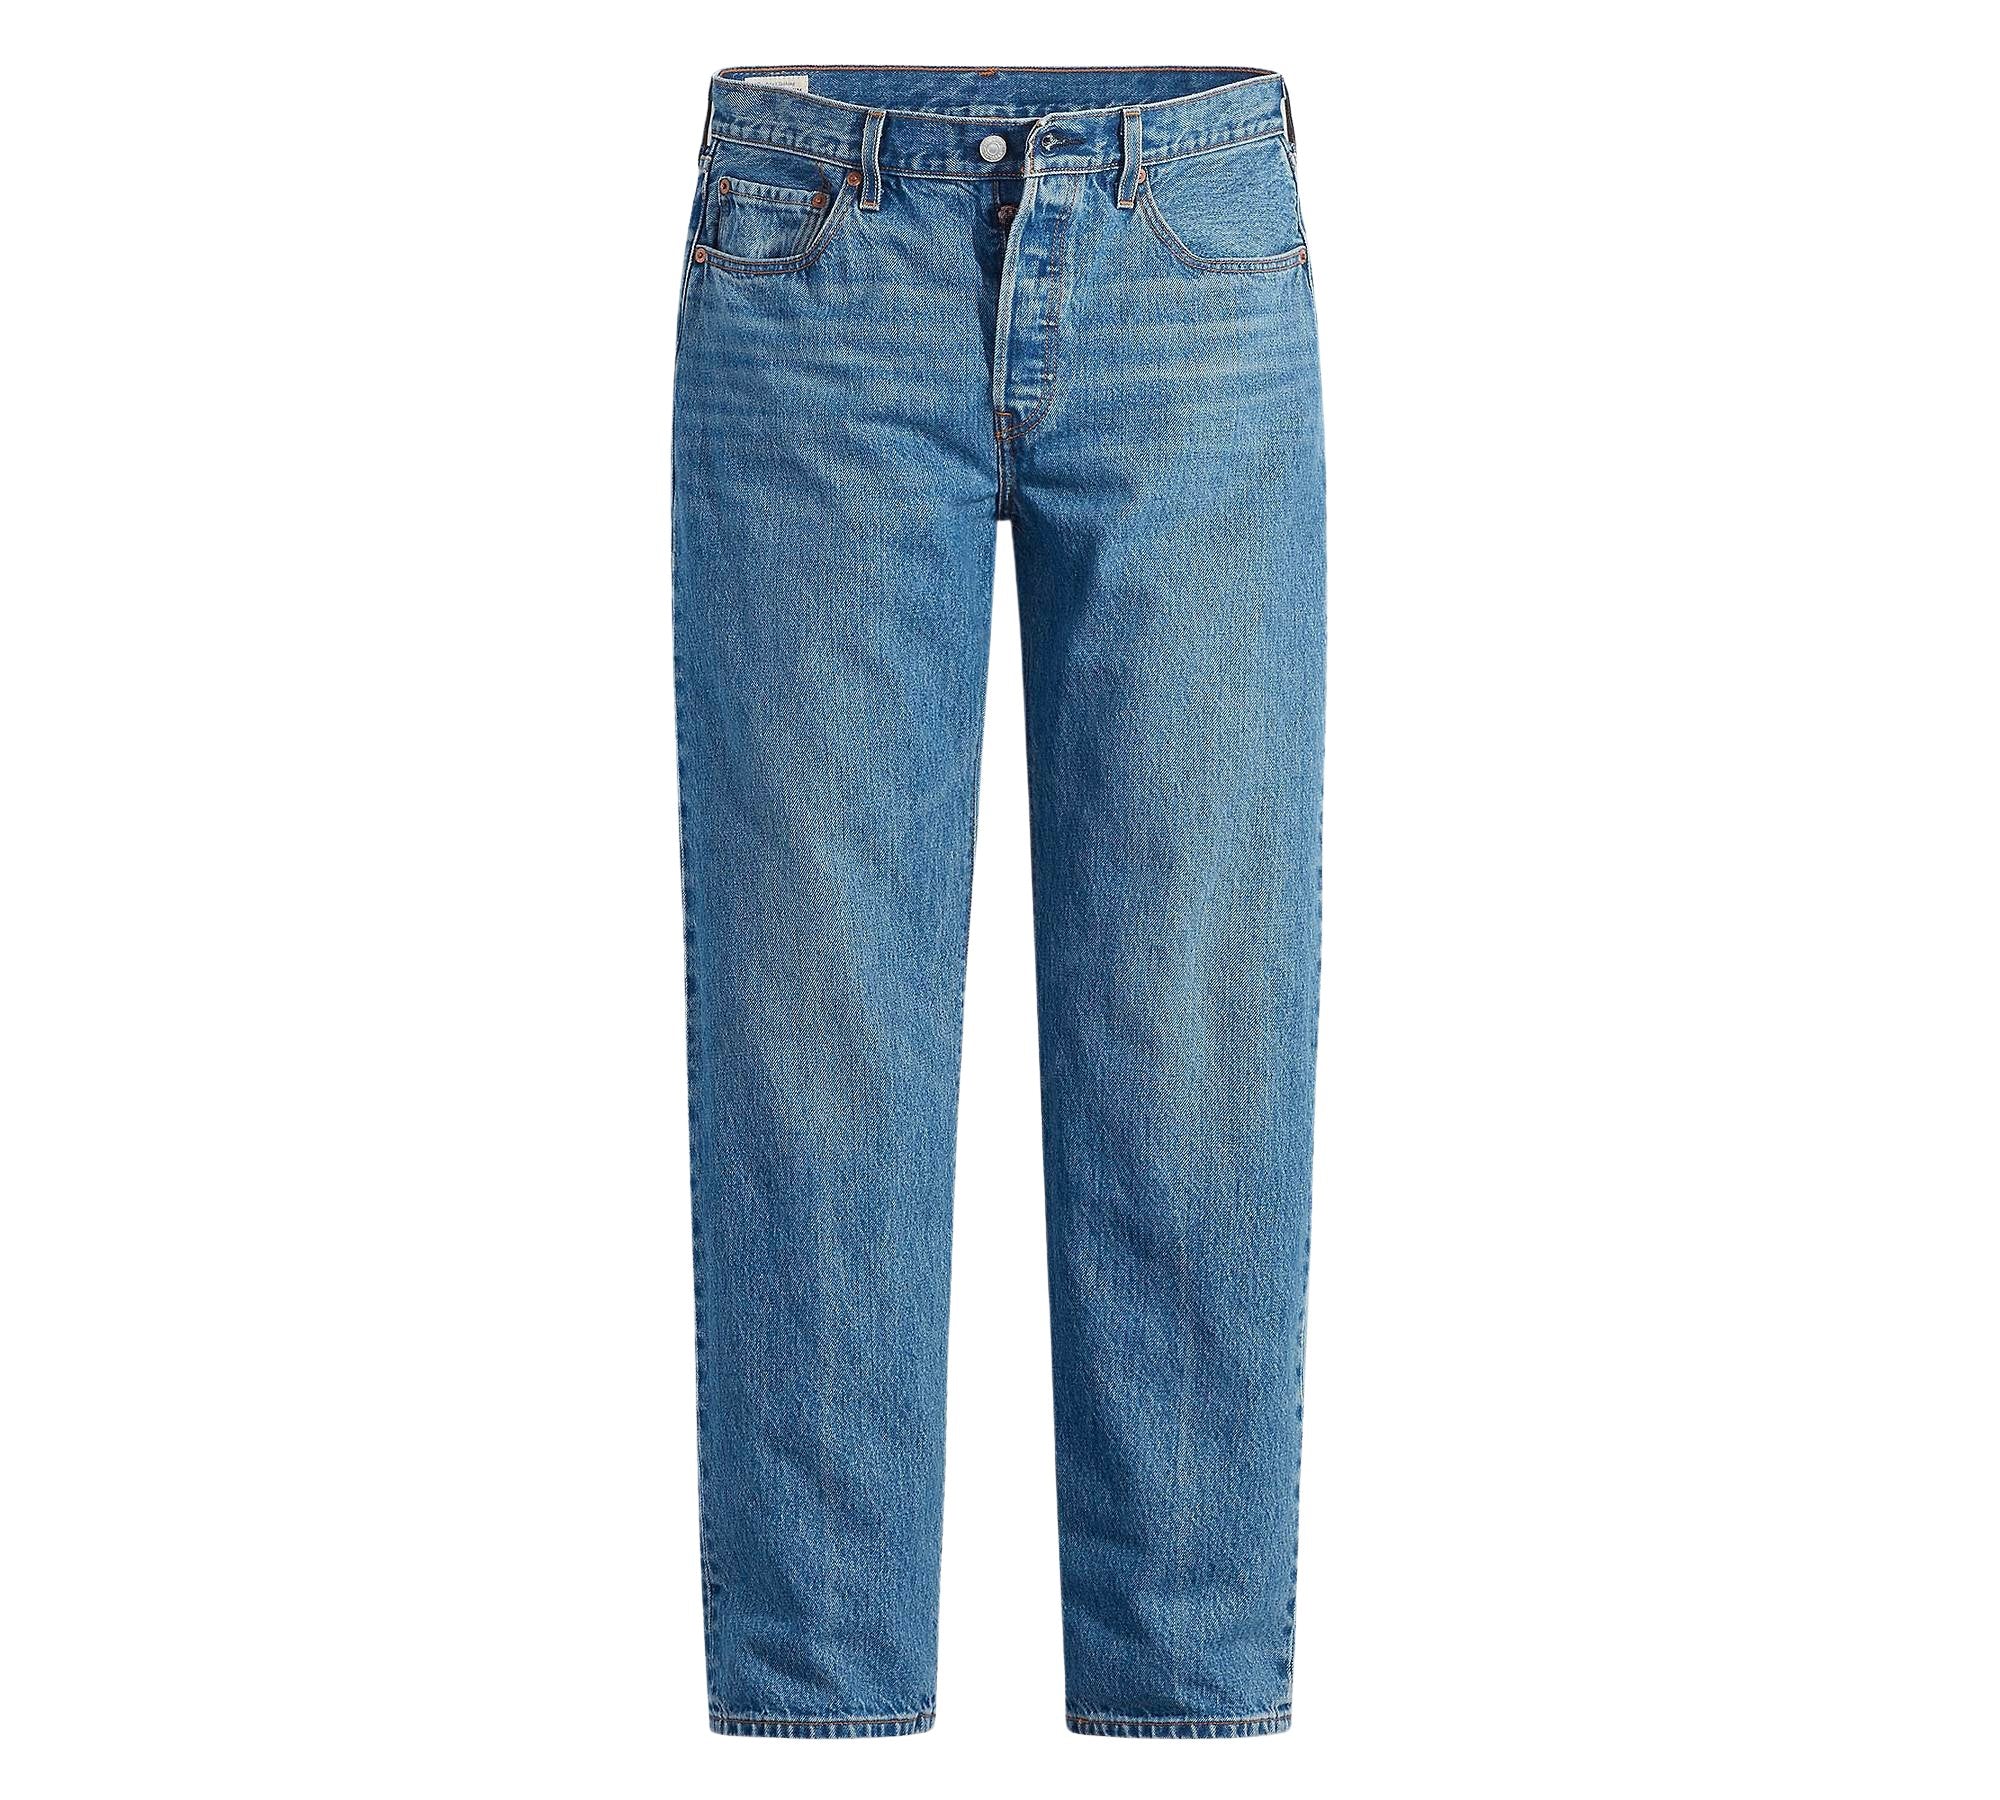 4 Pack - Vintage LEVI'S Classic Blue Zip Fly Jeans - Waist 34 - Length 30 - Vintage Superstore Online